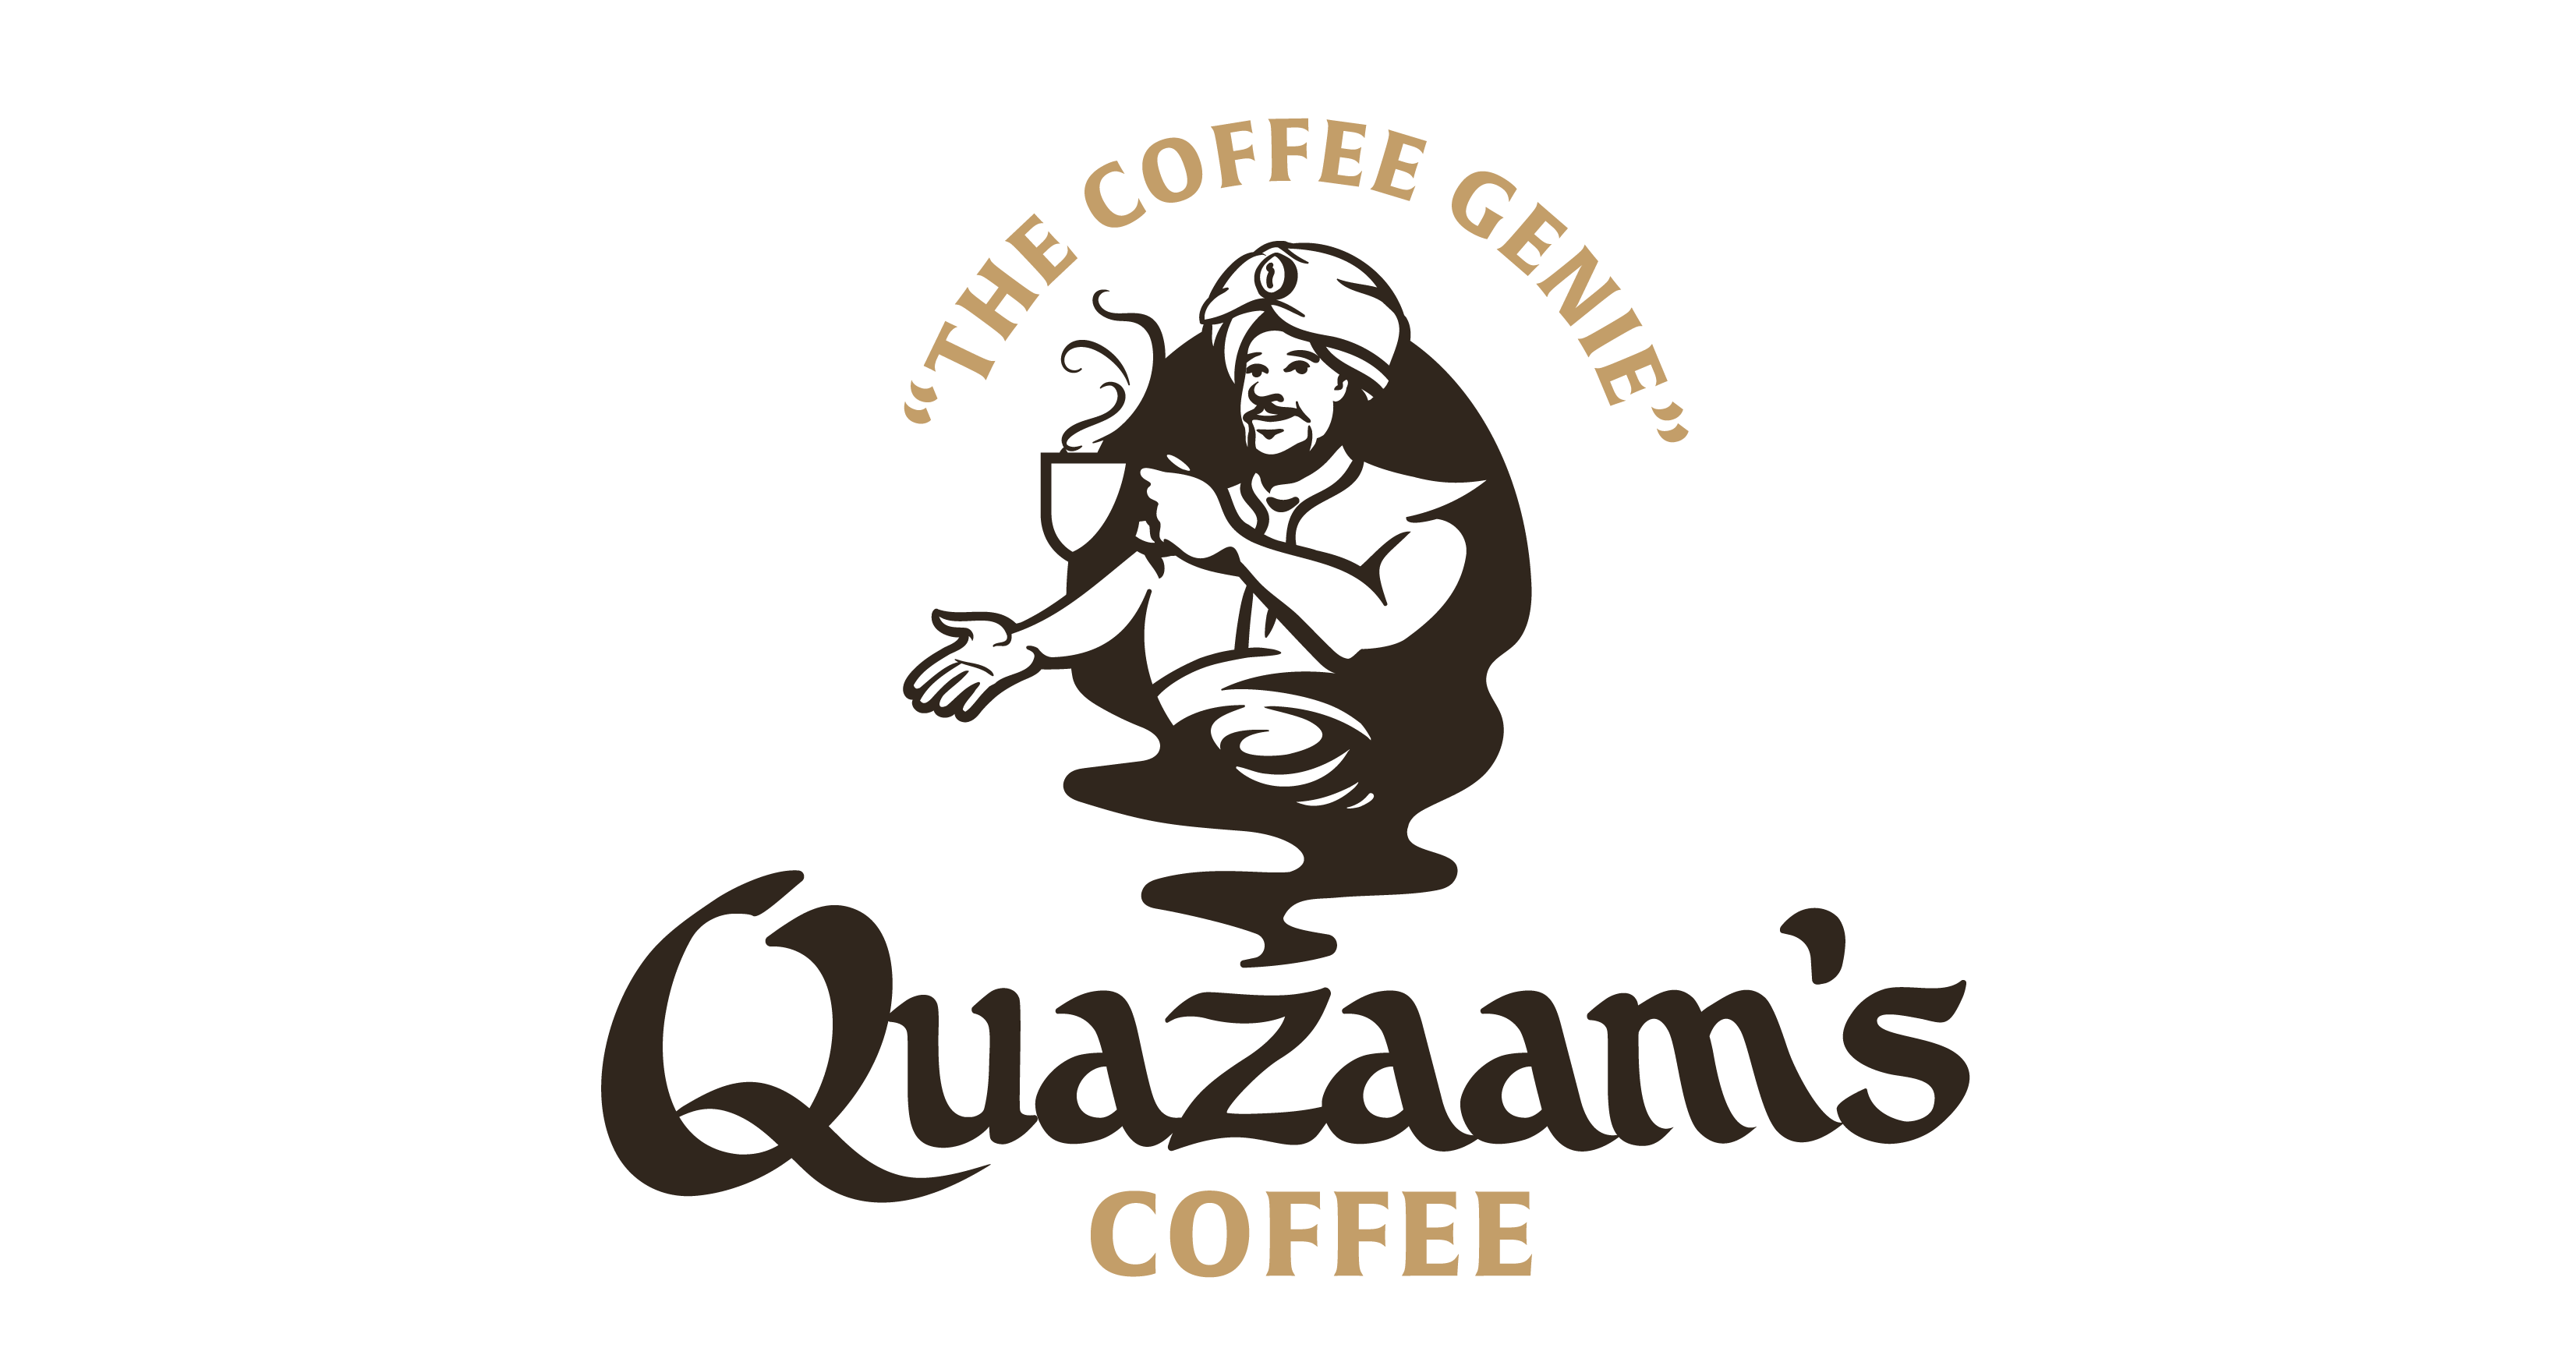 House Blend Coffee - Quazaams Coffee